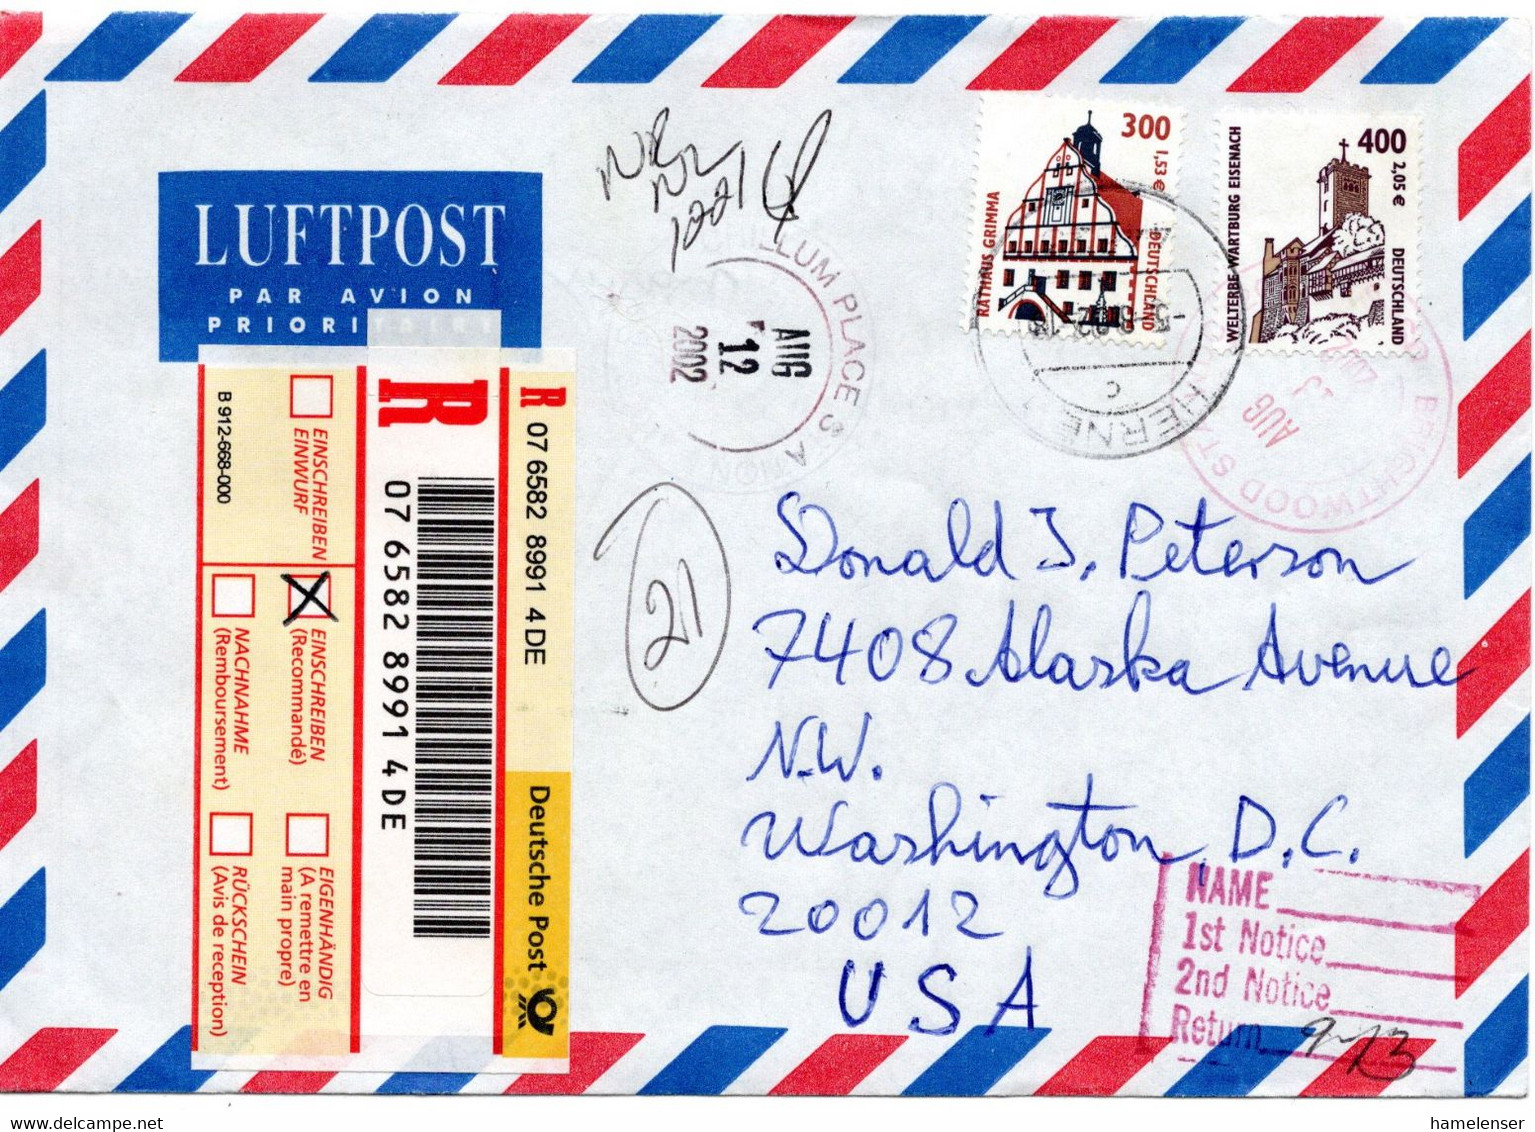 57216 - Bund - 2002 - €2,05 SWK Doppelnom. MiF A R-LpBf HERNE -> BRIGHTWOOD STATION, DC (USA) - Covers & Documents